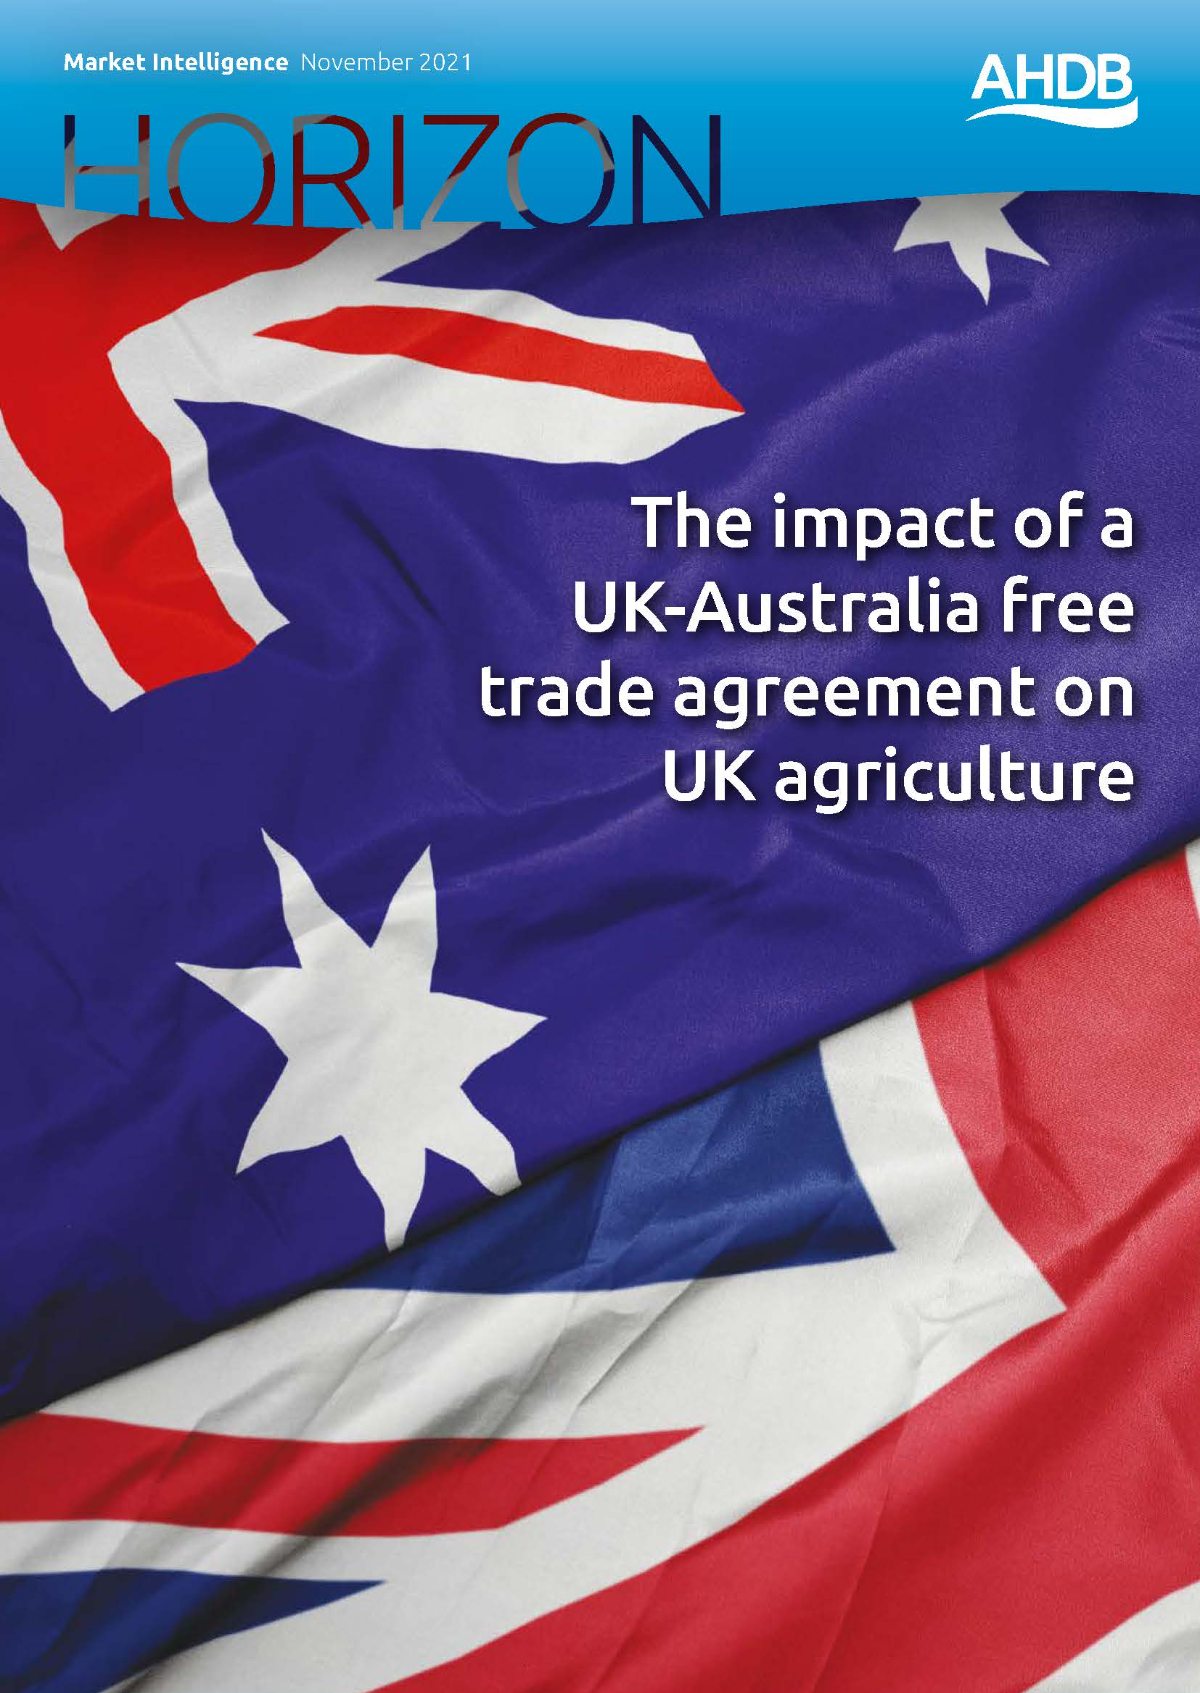 Horizon report - Australia trade deal